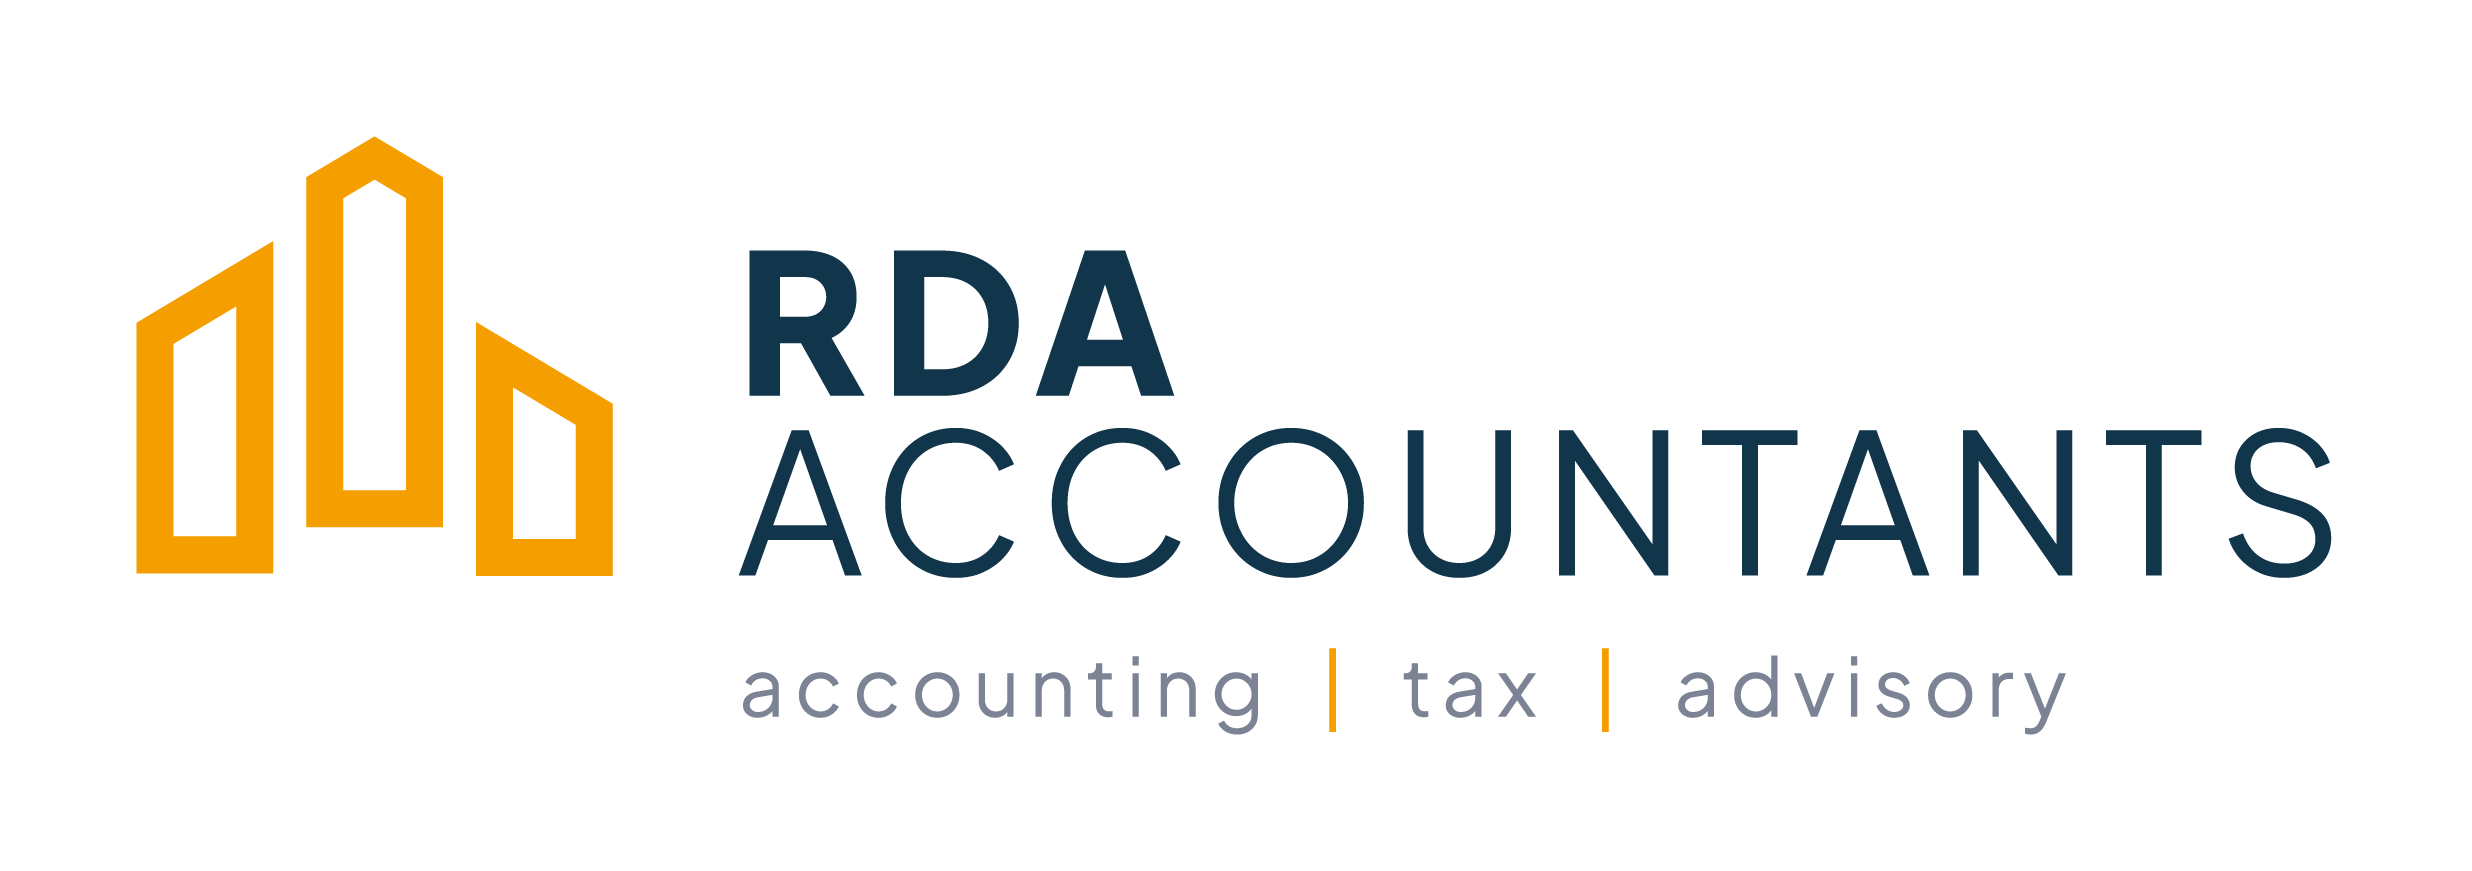 RDA Accountants Logo Tagline - Transparent BG-2